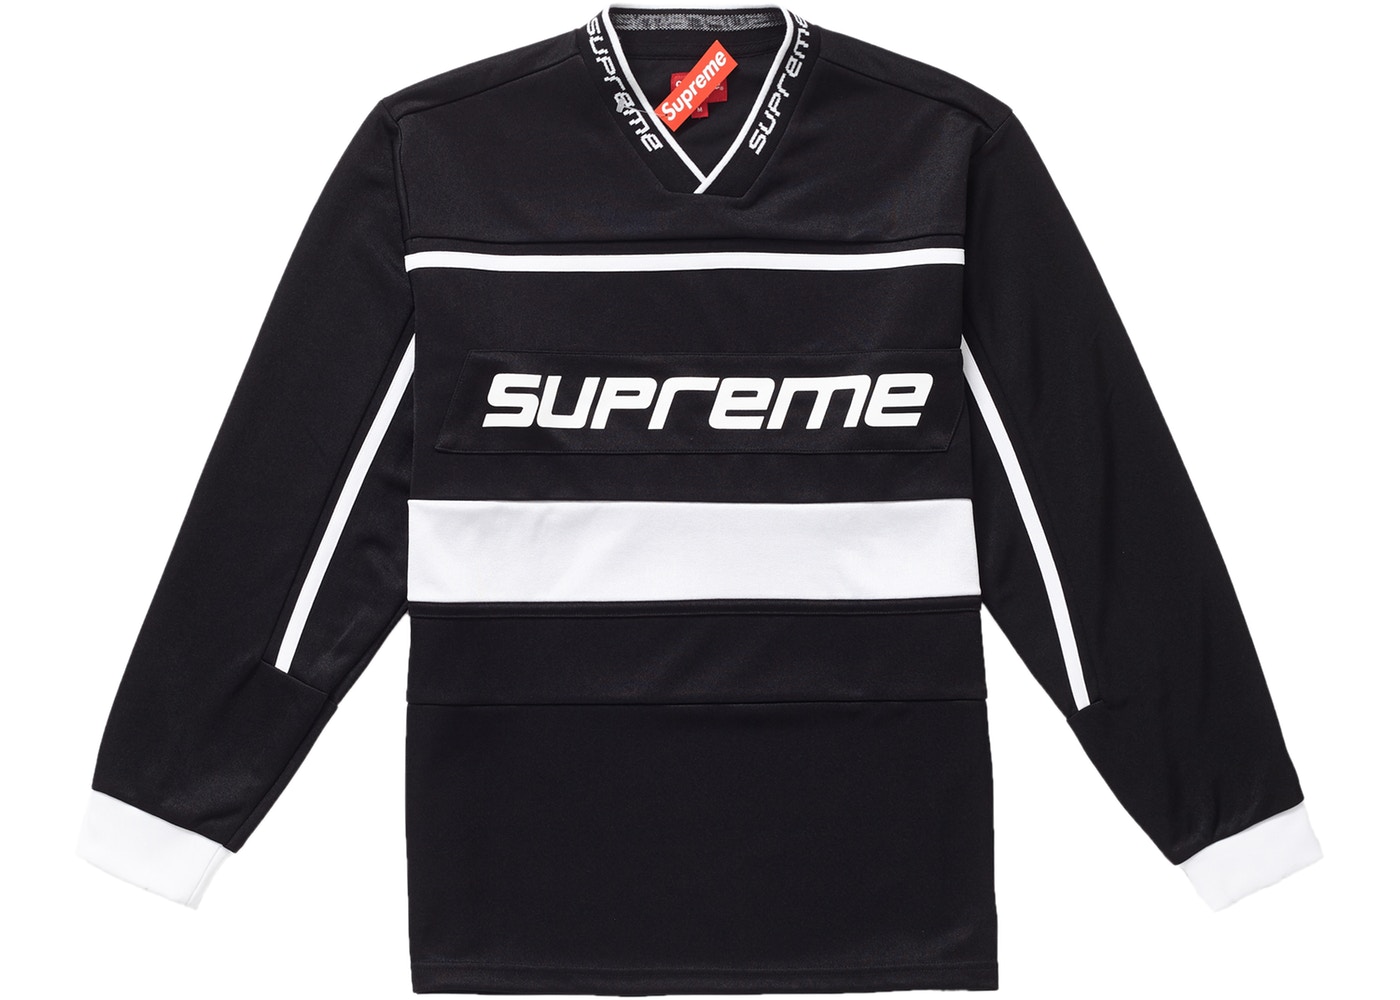 Black by Popular Demand® Unisex Hockey Jersey Shirt - HGC Apparel